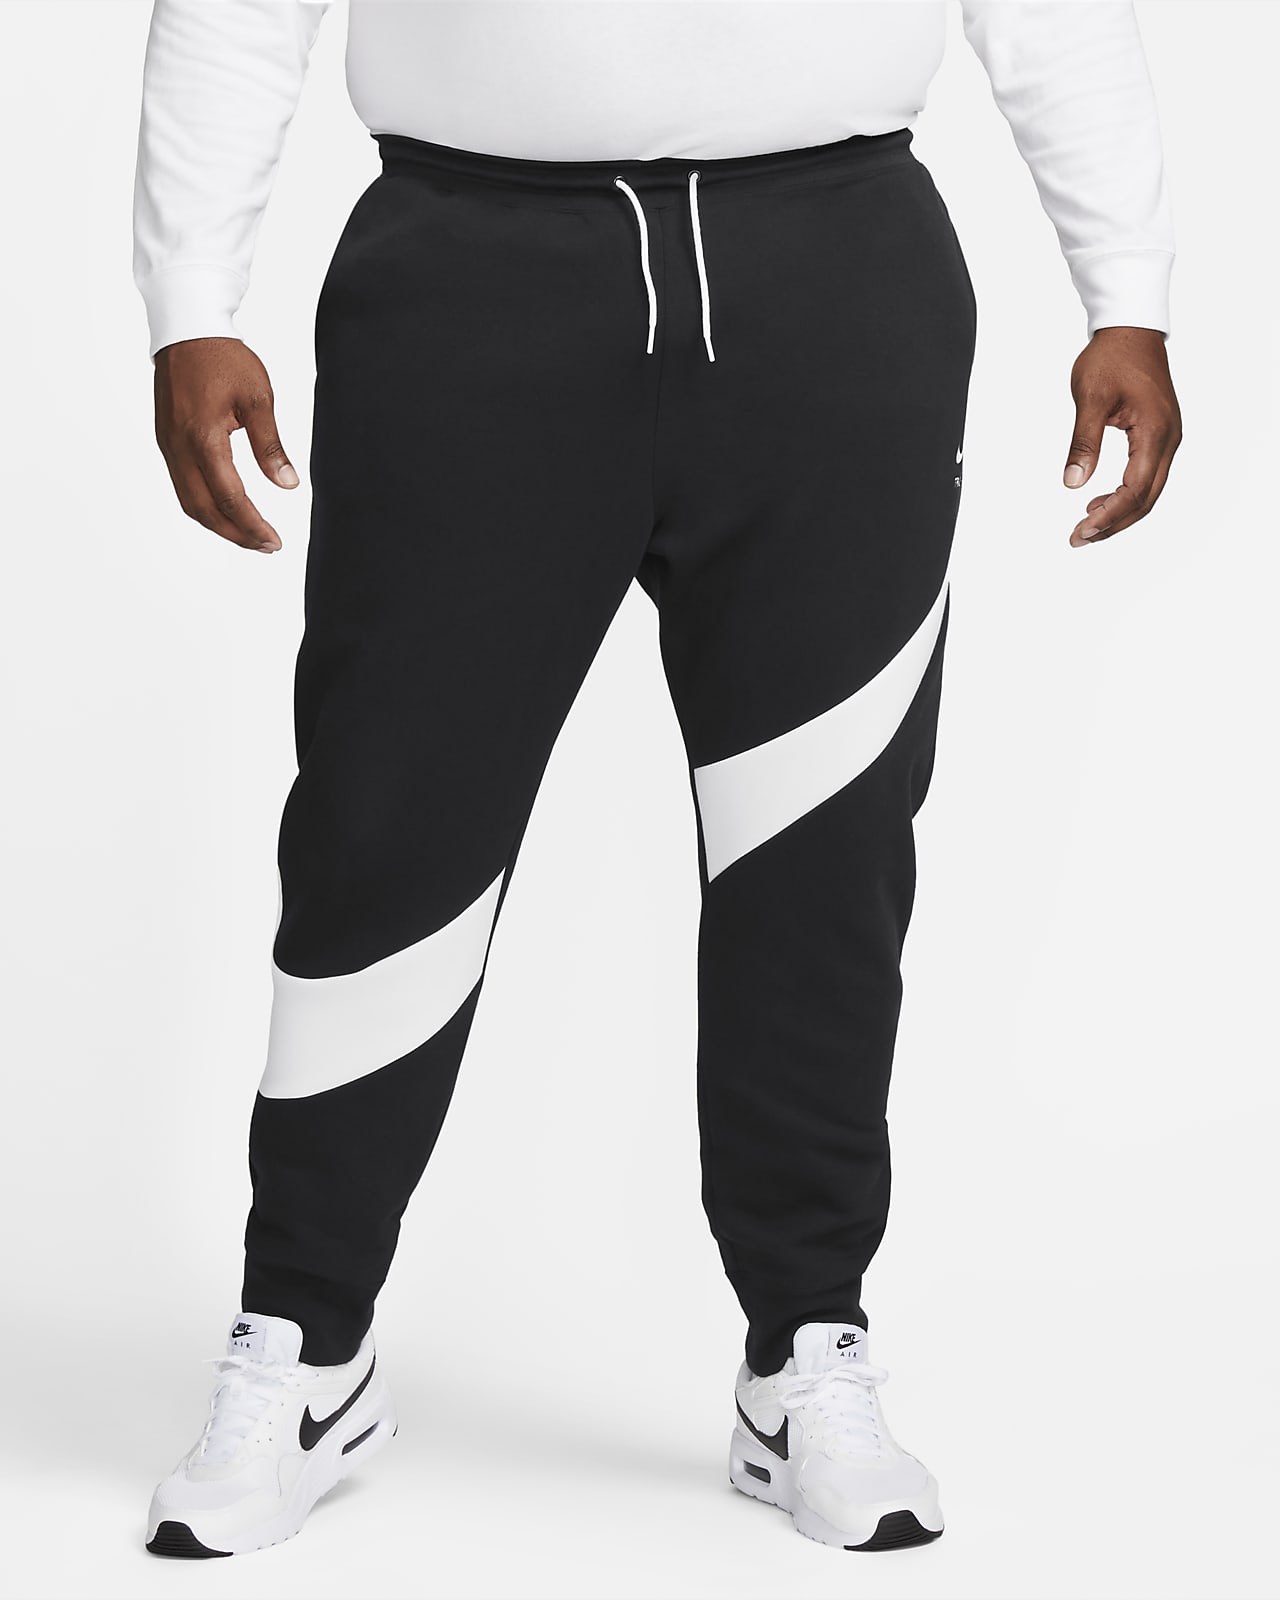 Pantalones hombre Sportswear Swoosh Tech Nike.com